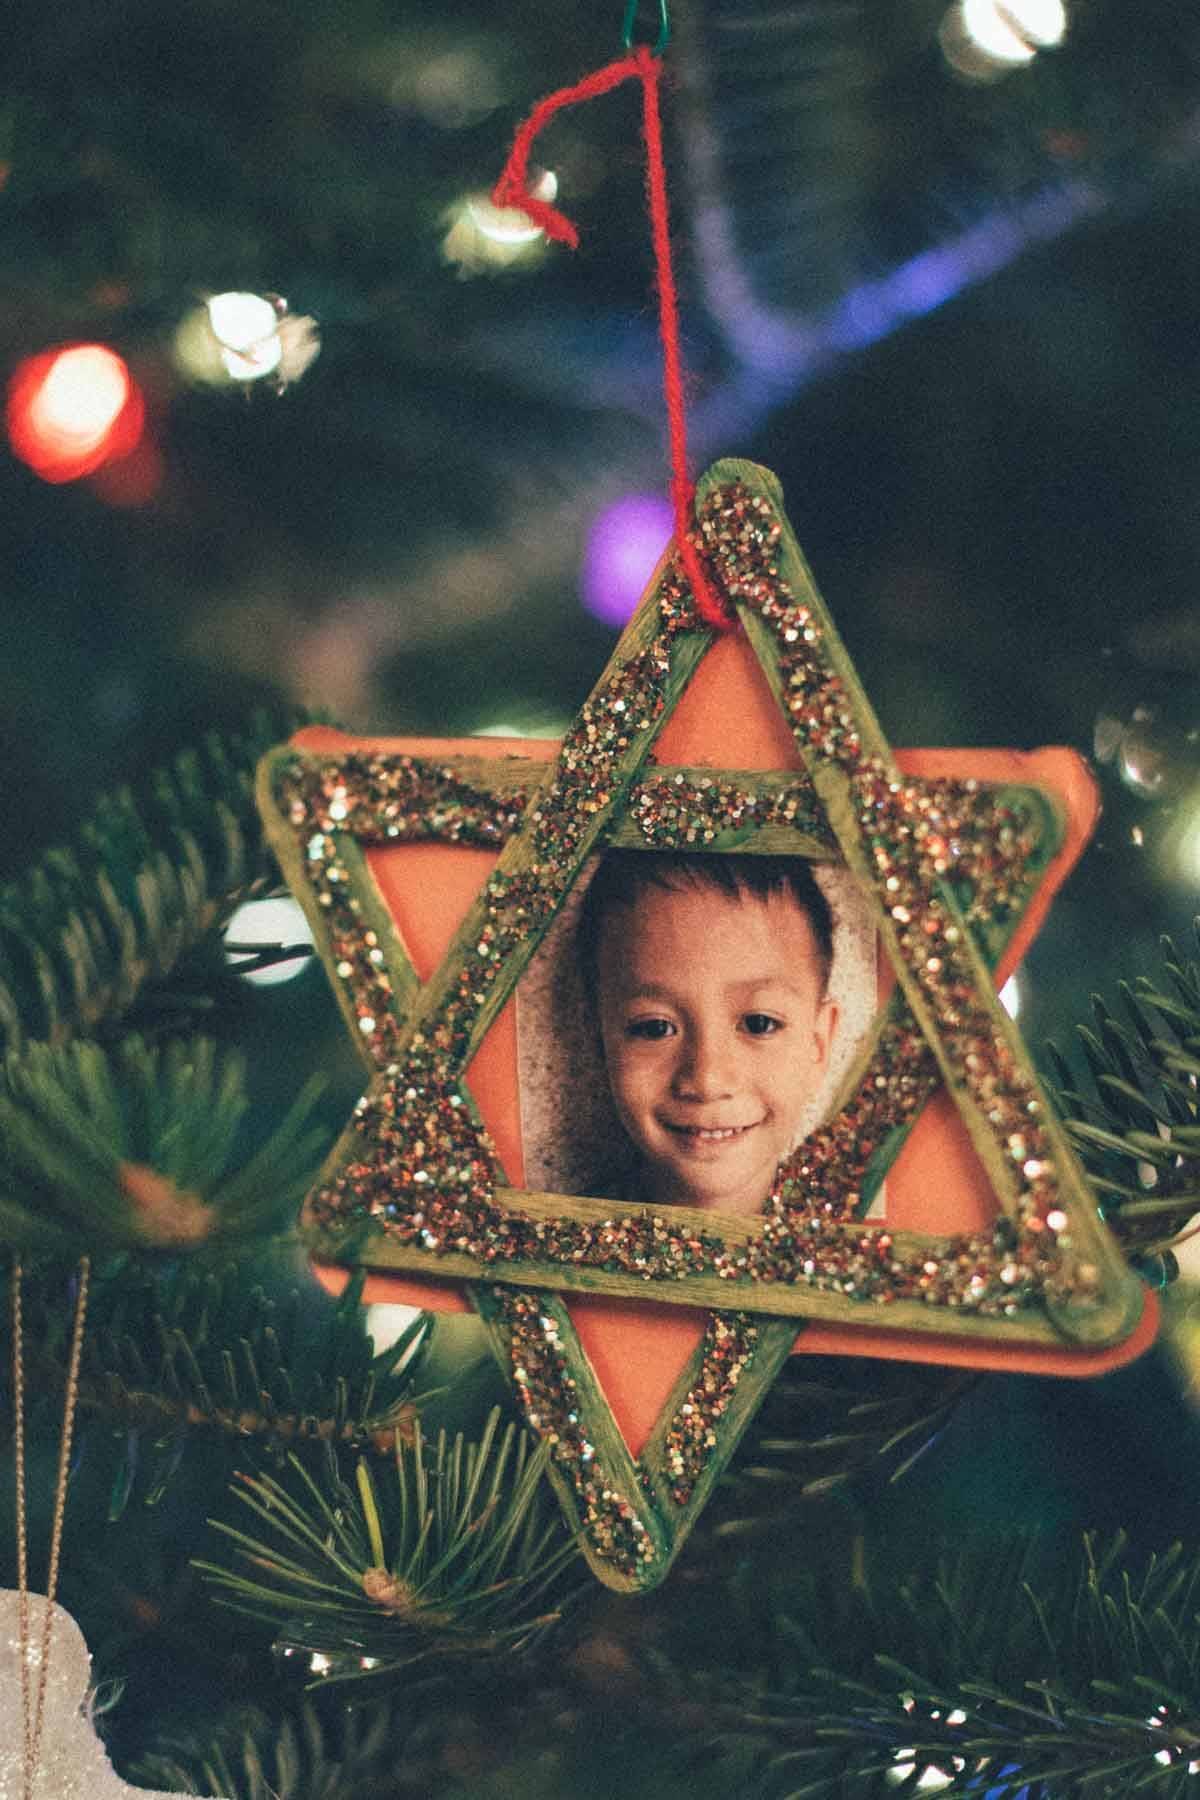 Ornament on a Christmas tree.